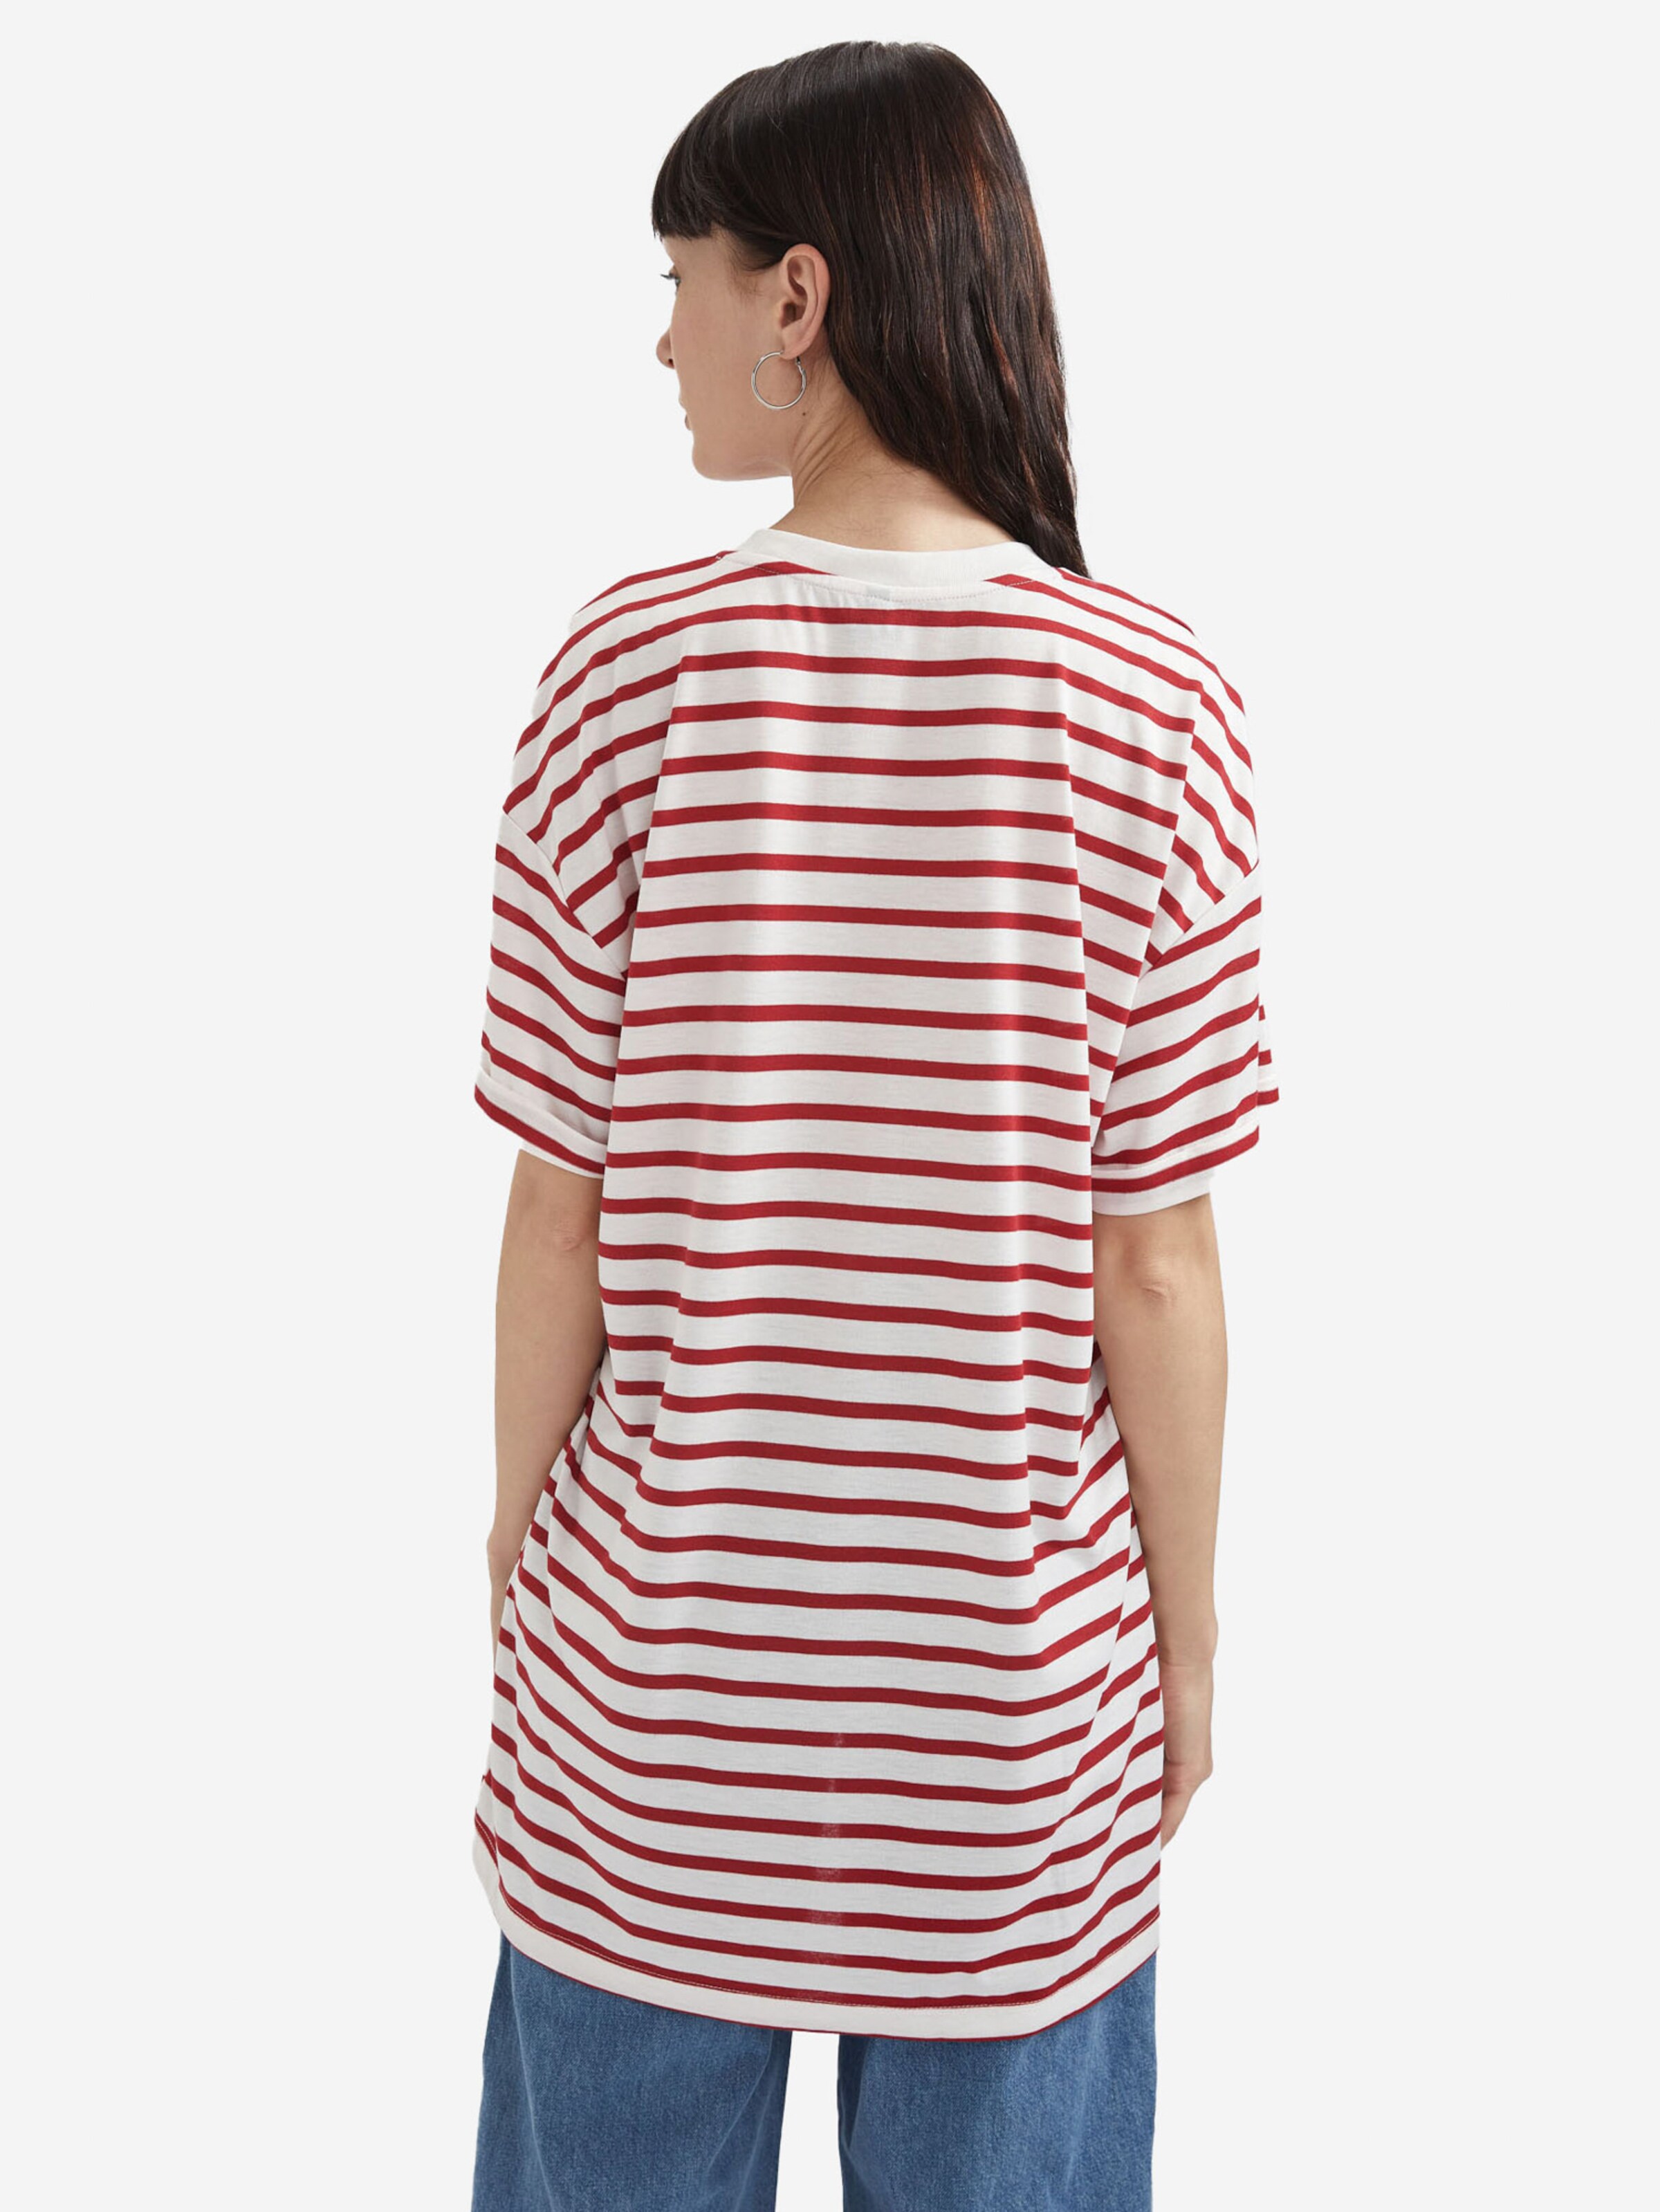 Frauen Shirts & Tops DeFacto Oversizeshirt in Rot, Weiß - PS89743